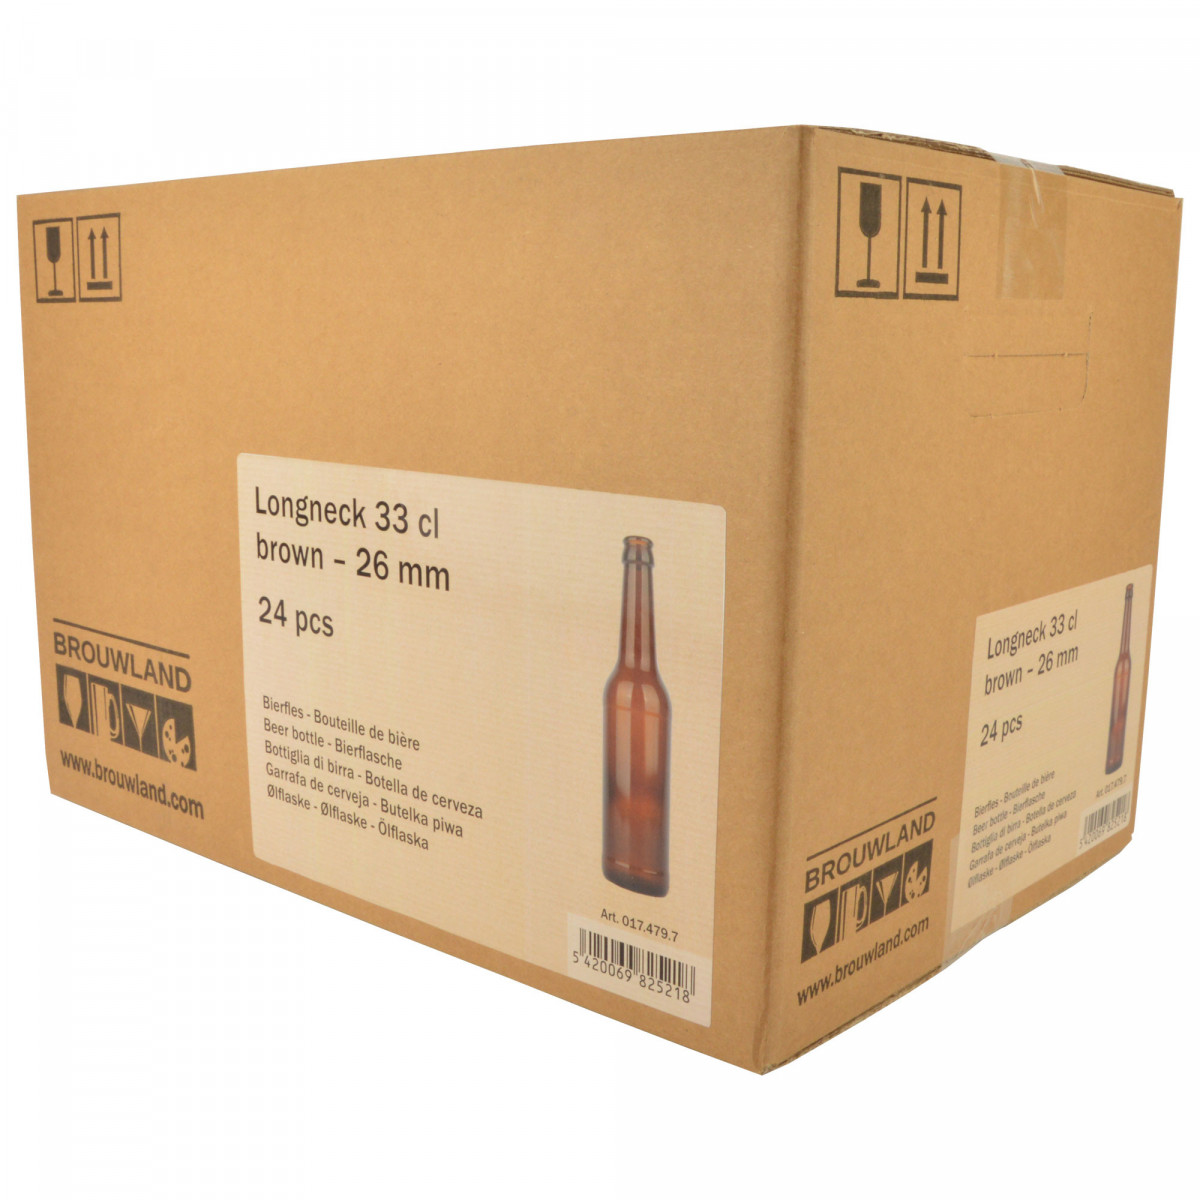 Longneck beer bottle 33 cl, brown, 26 mm, box 24 pcs